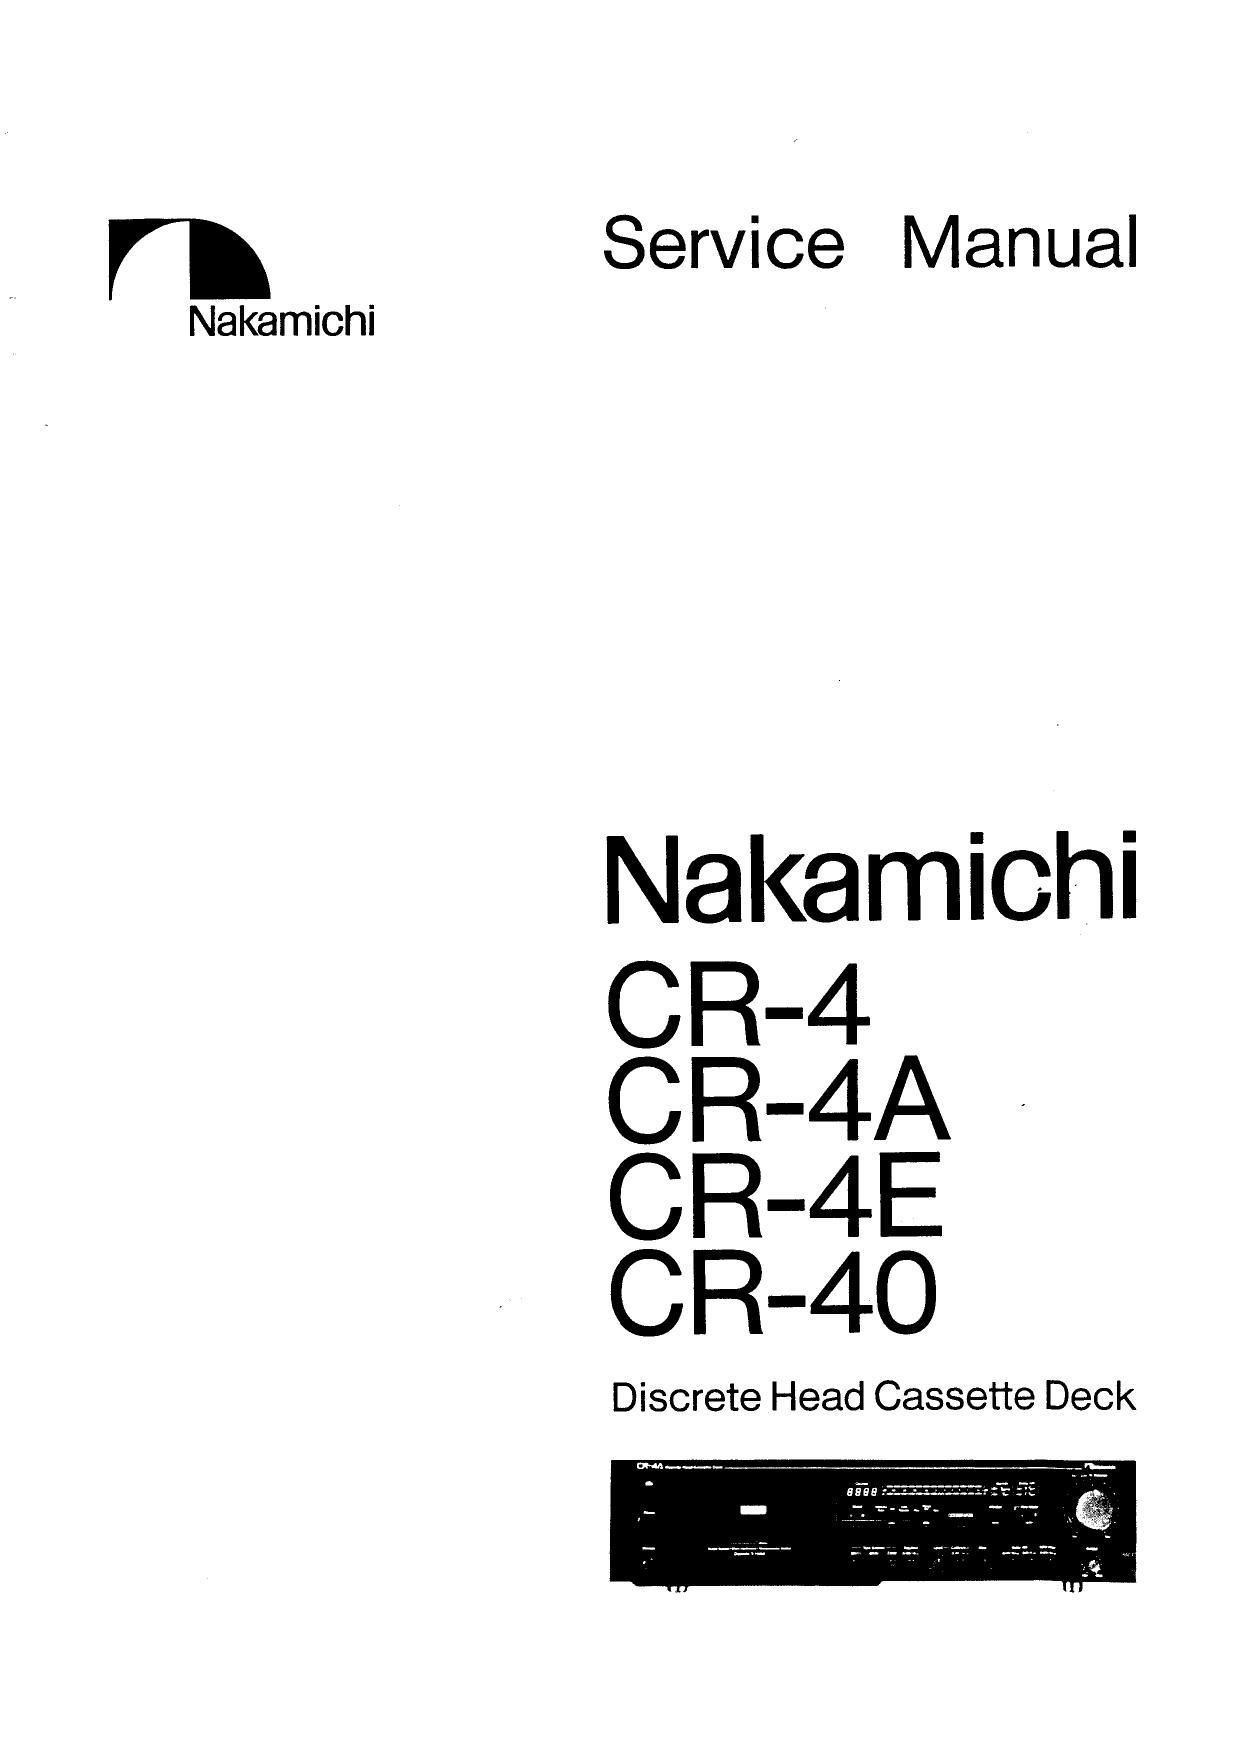 Nakamichi CR 4 A Service Manual